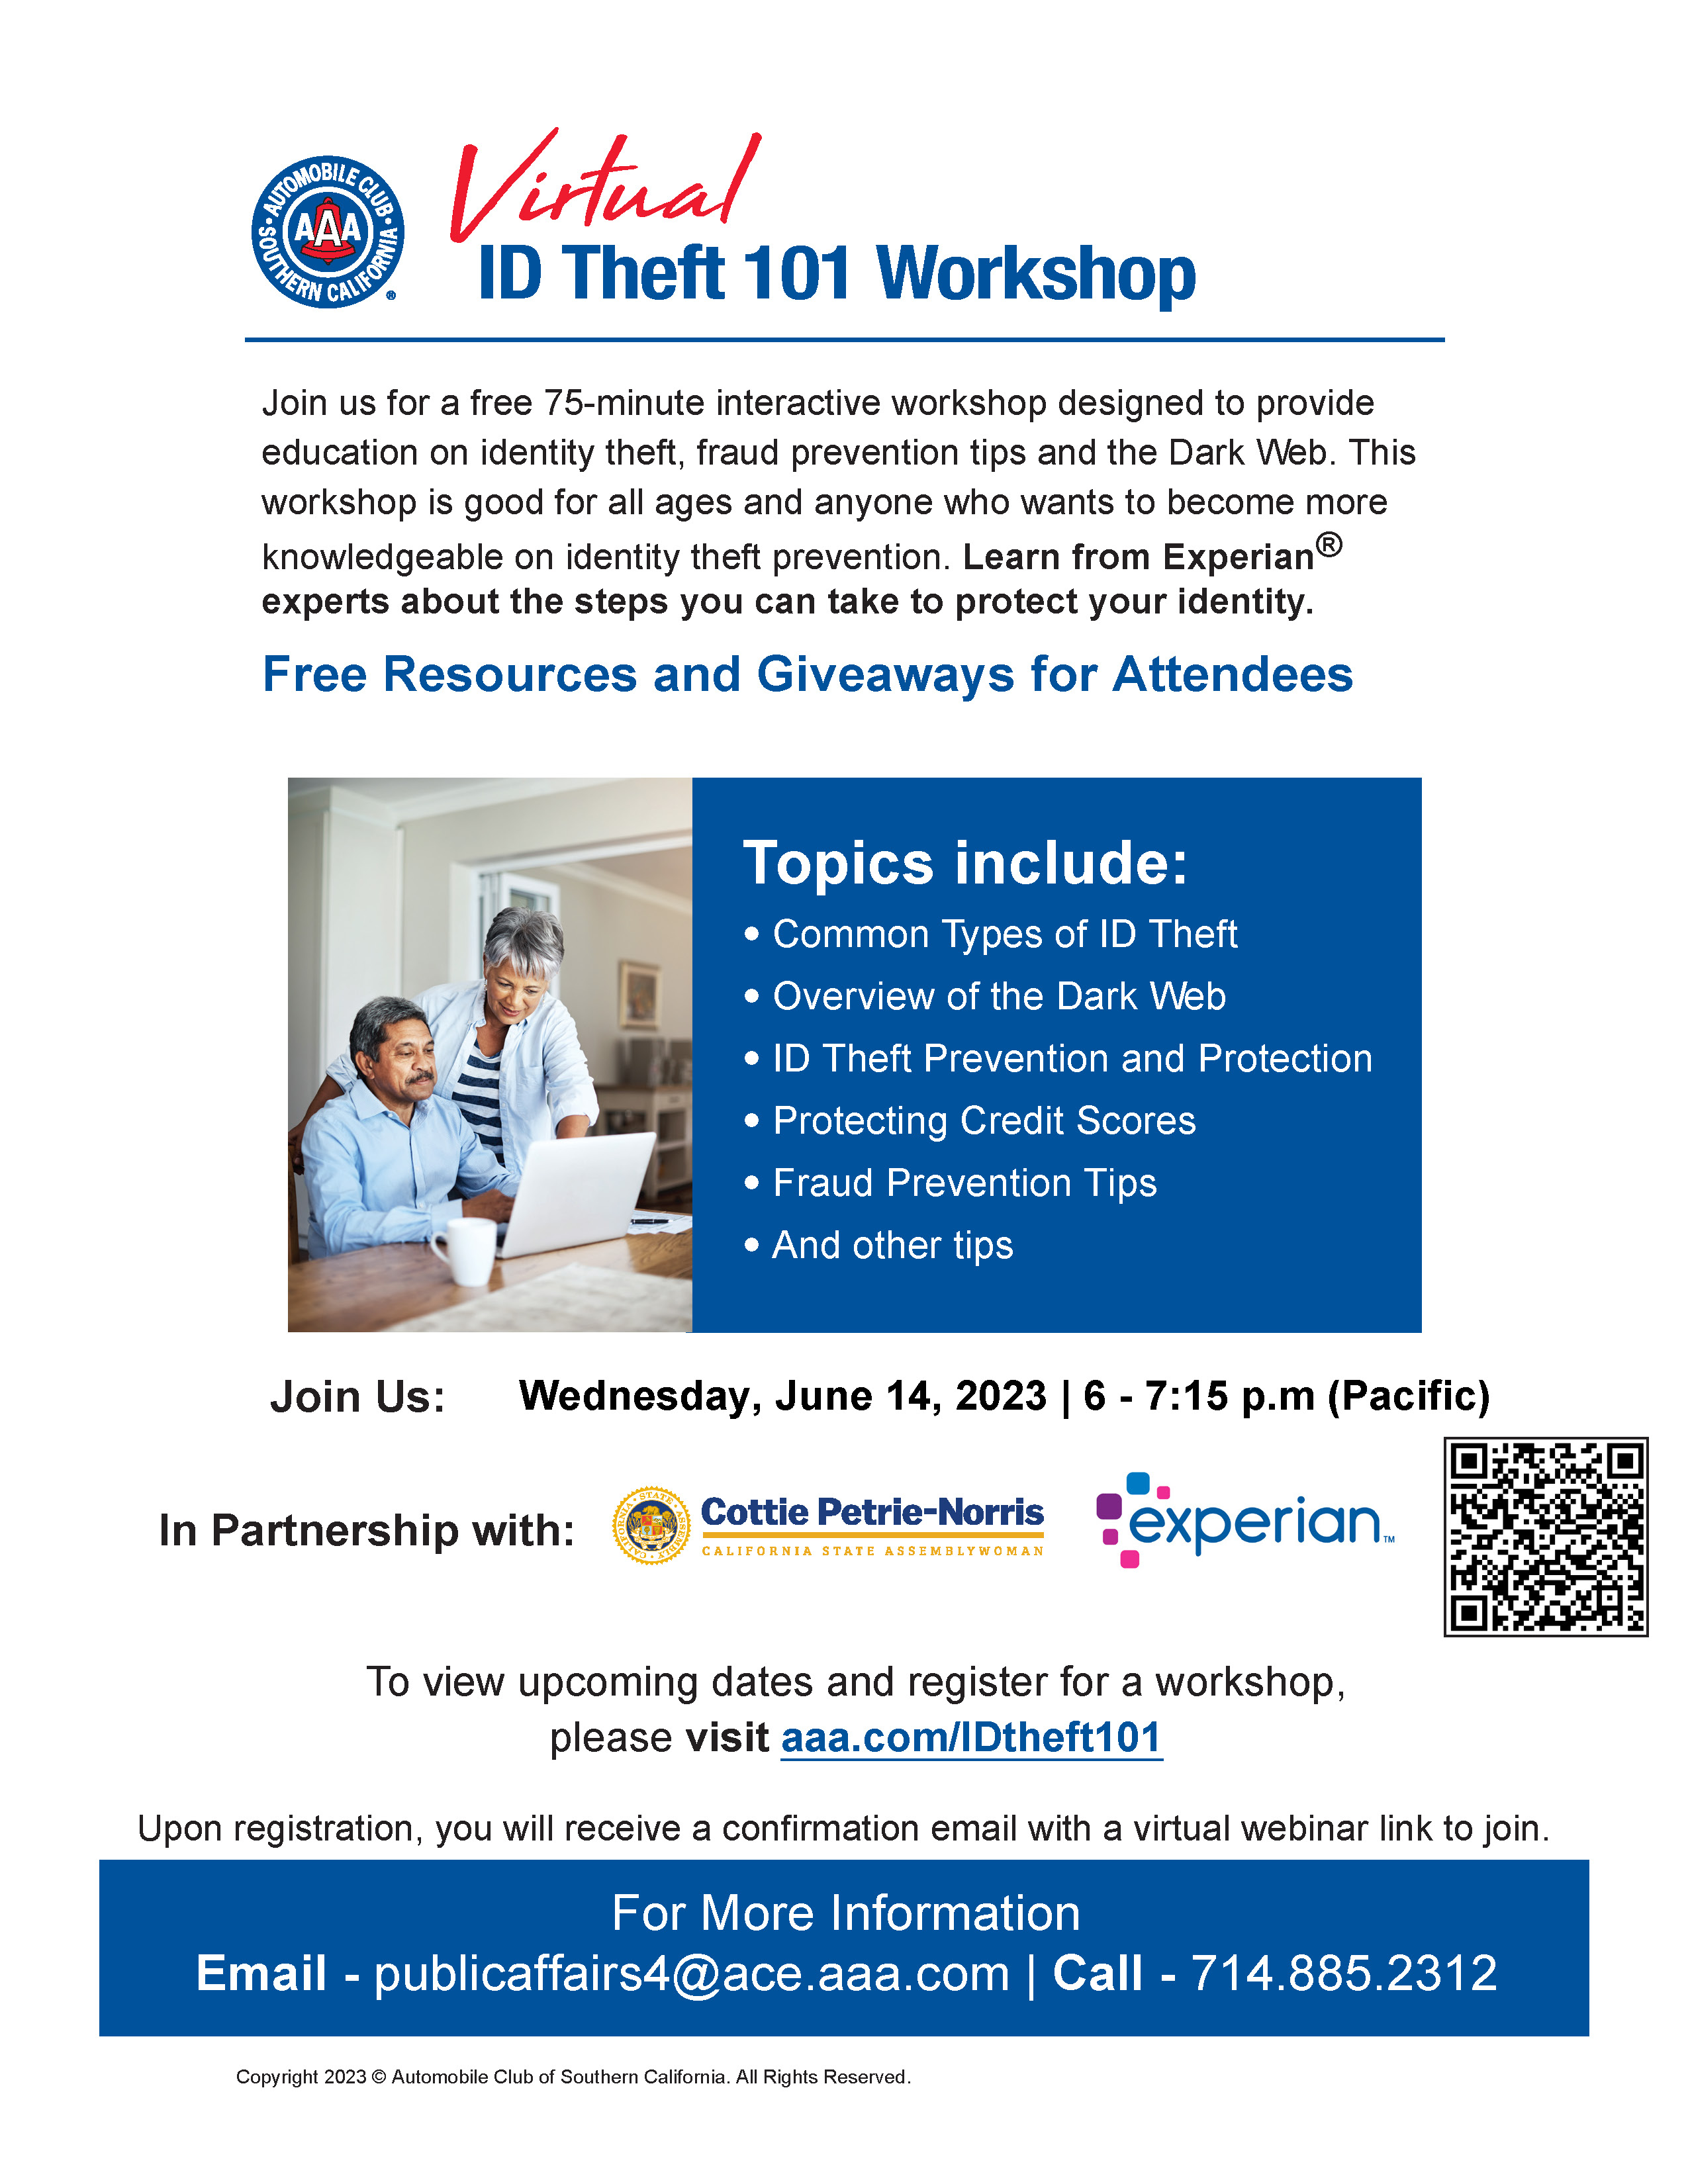 Virtual ID Theft 101 Workshop